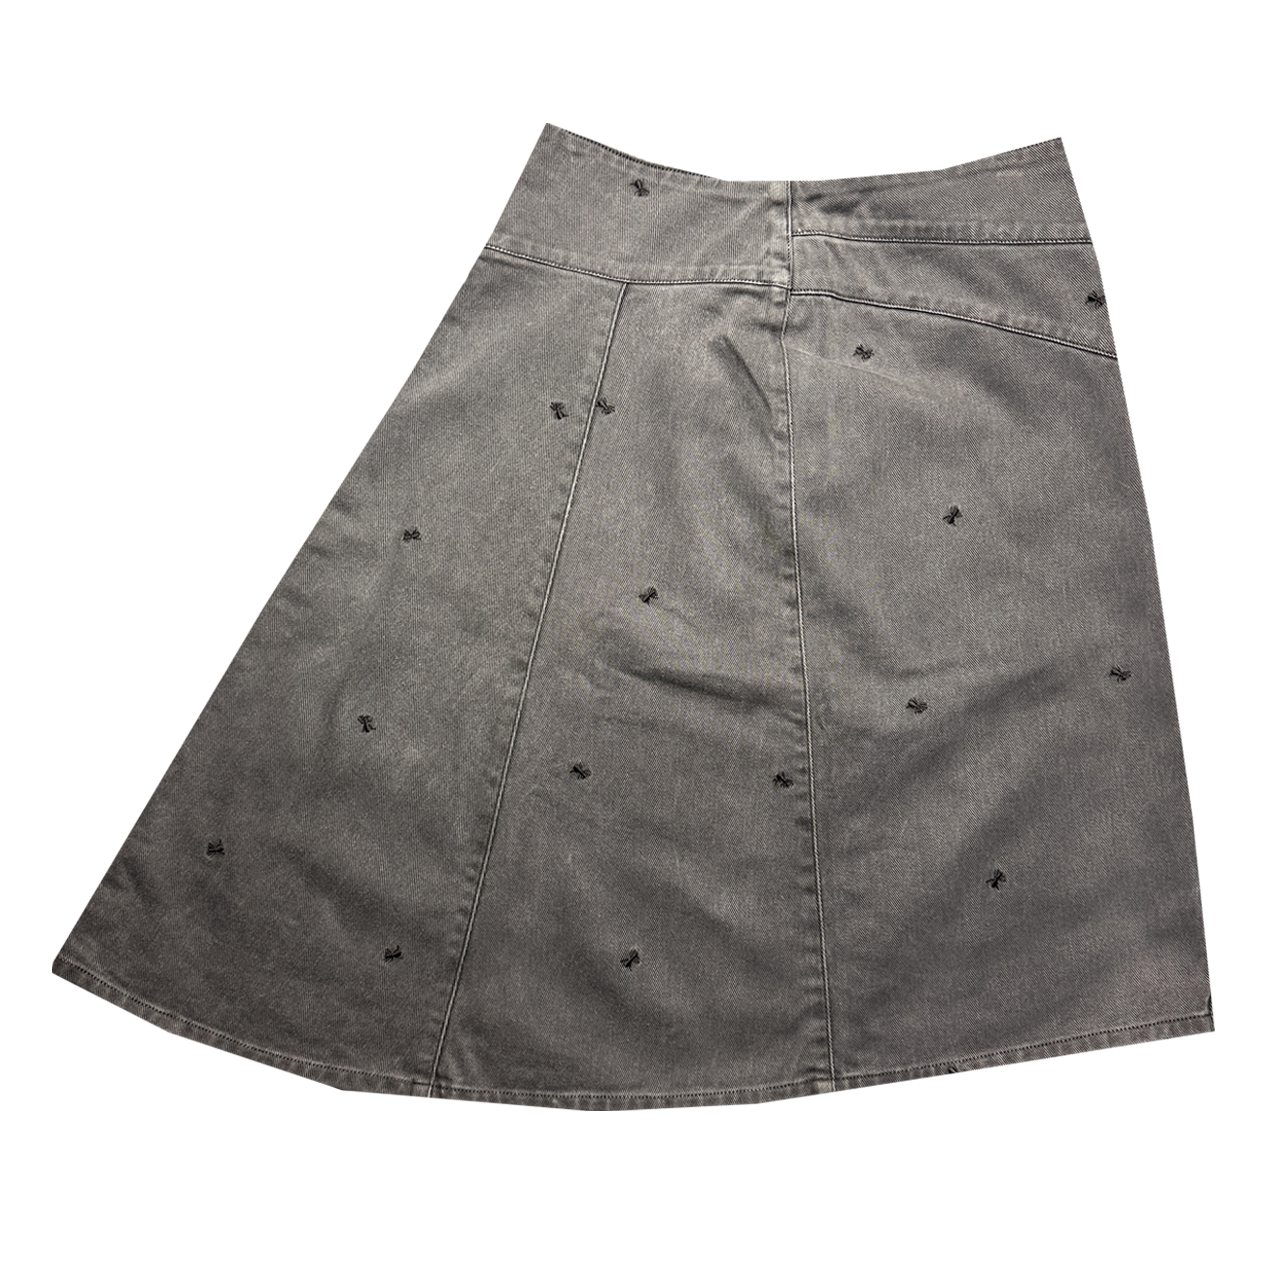 Formica Skirt